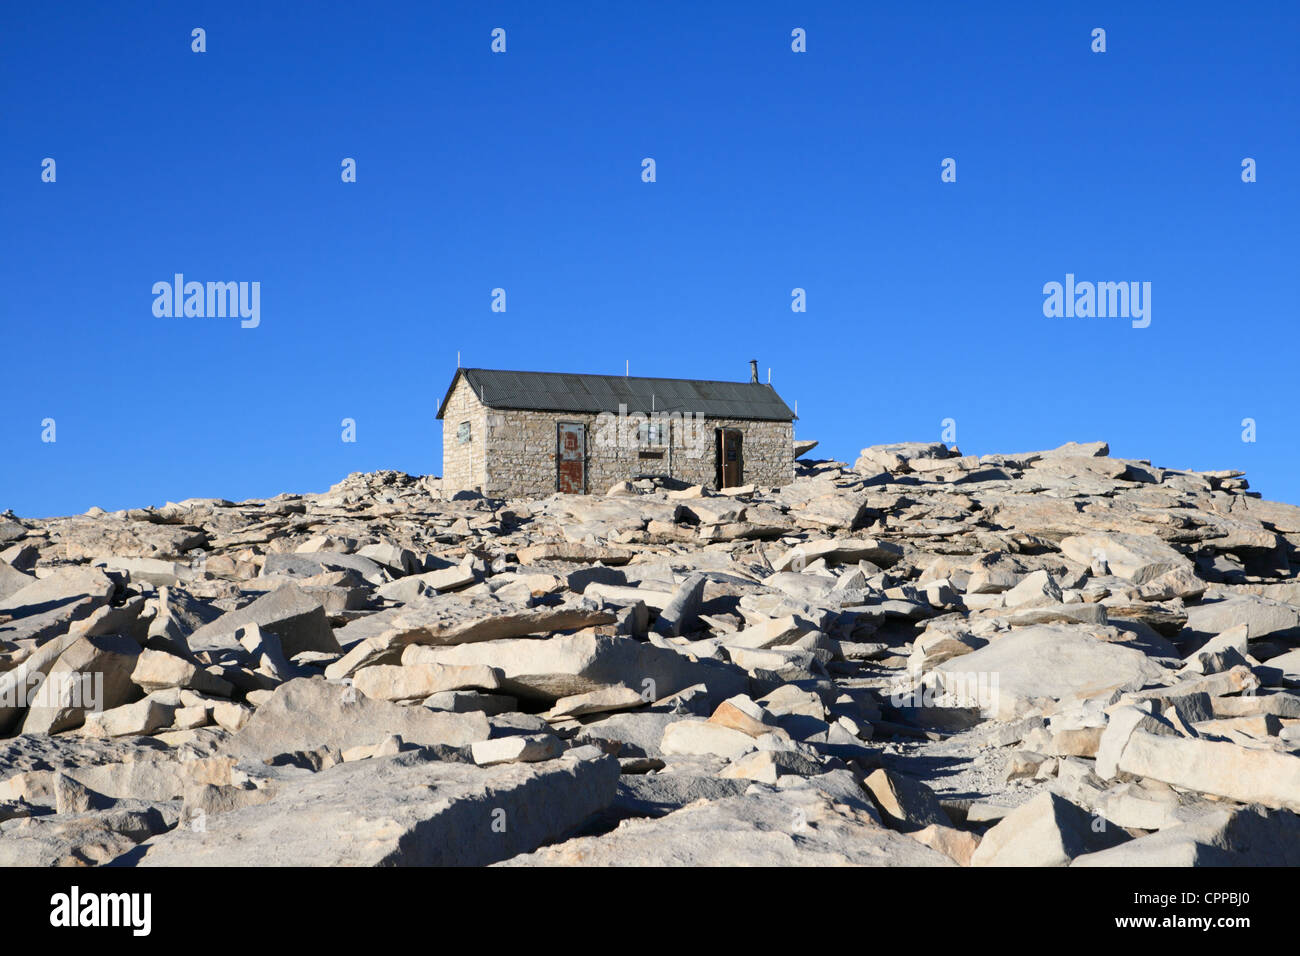 Mount Whitney cumbre cabaña en 14505 pies sobre la cumbre del Monte Whitney en California Foto de stock